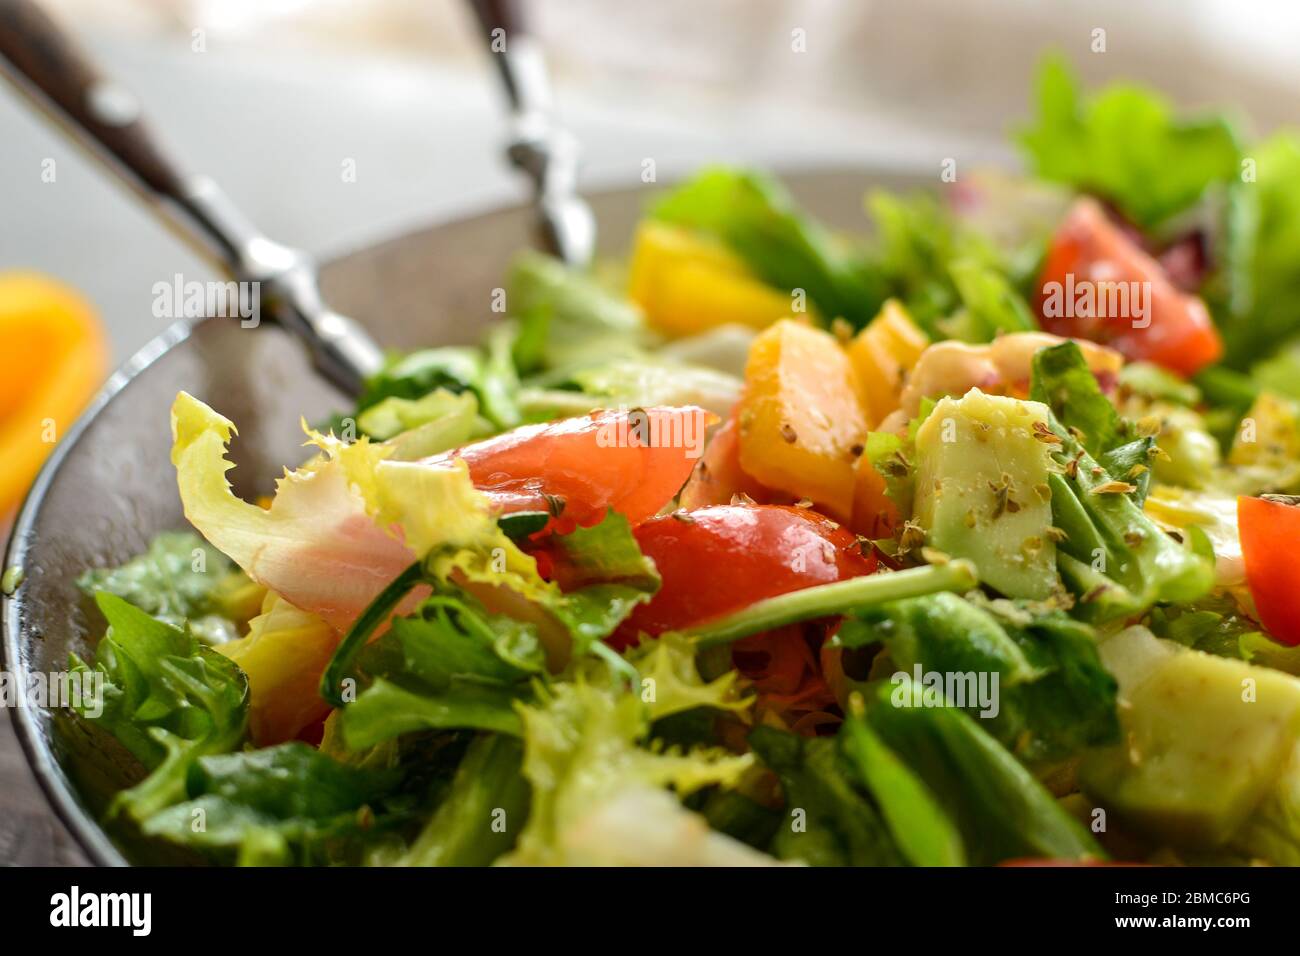 Healthy vegan food. Vegetable salad dressing, tomatoes, bell peppers, avocado. Close-up. Vegetarianism and veganism. Stock Photo